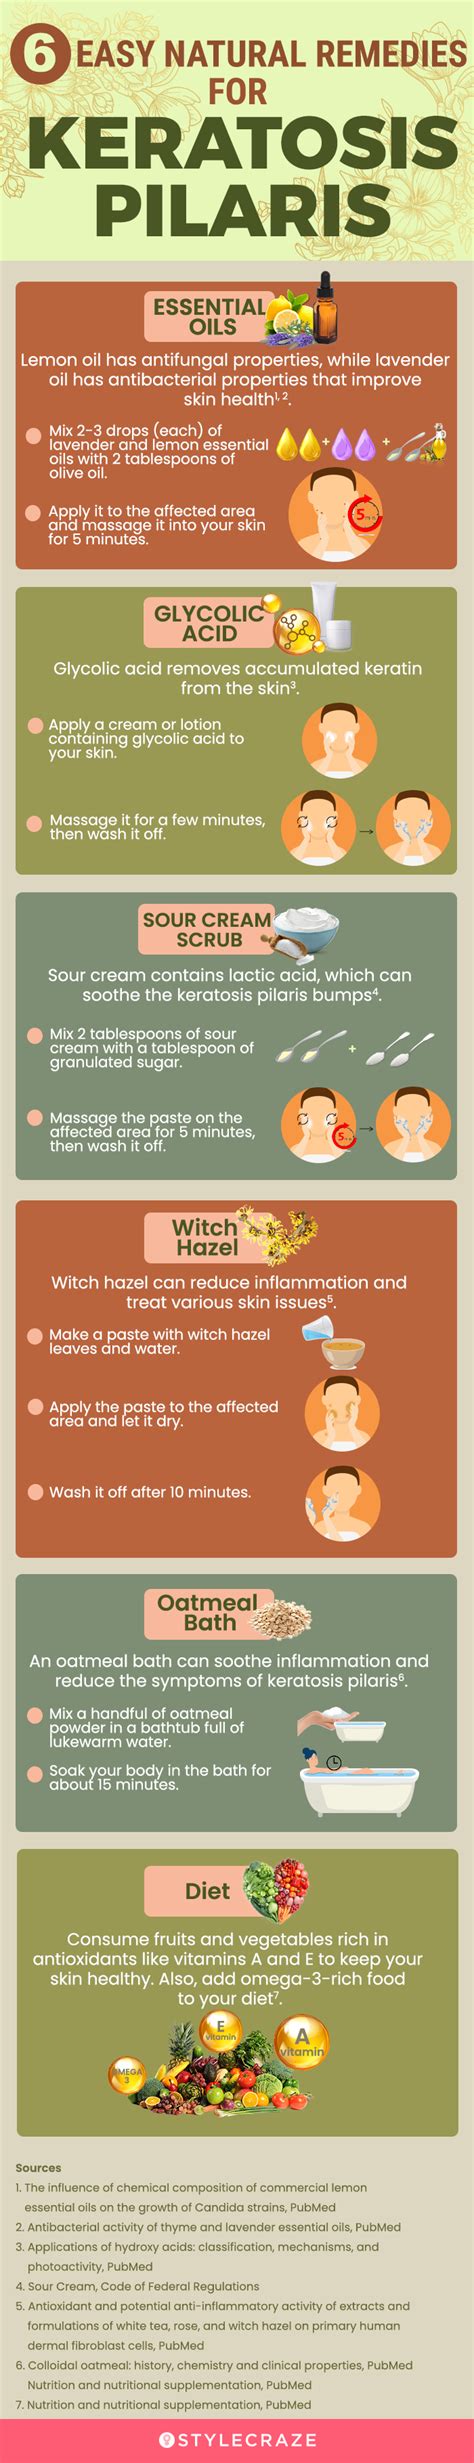 14 Effective Home Remedies For Treating Keratosis Pilaris